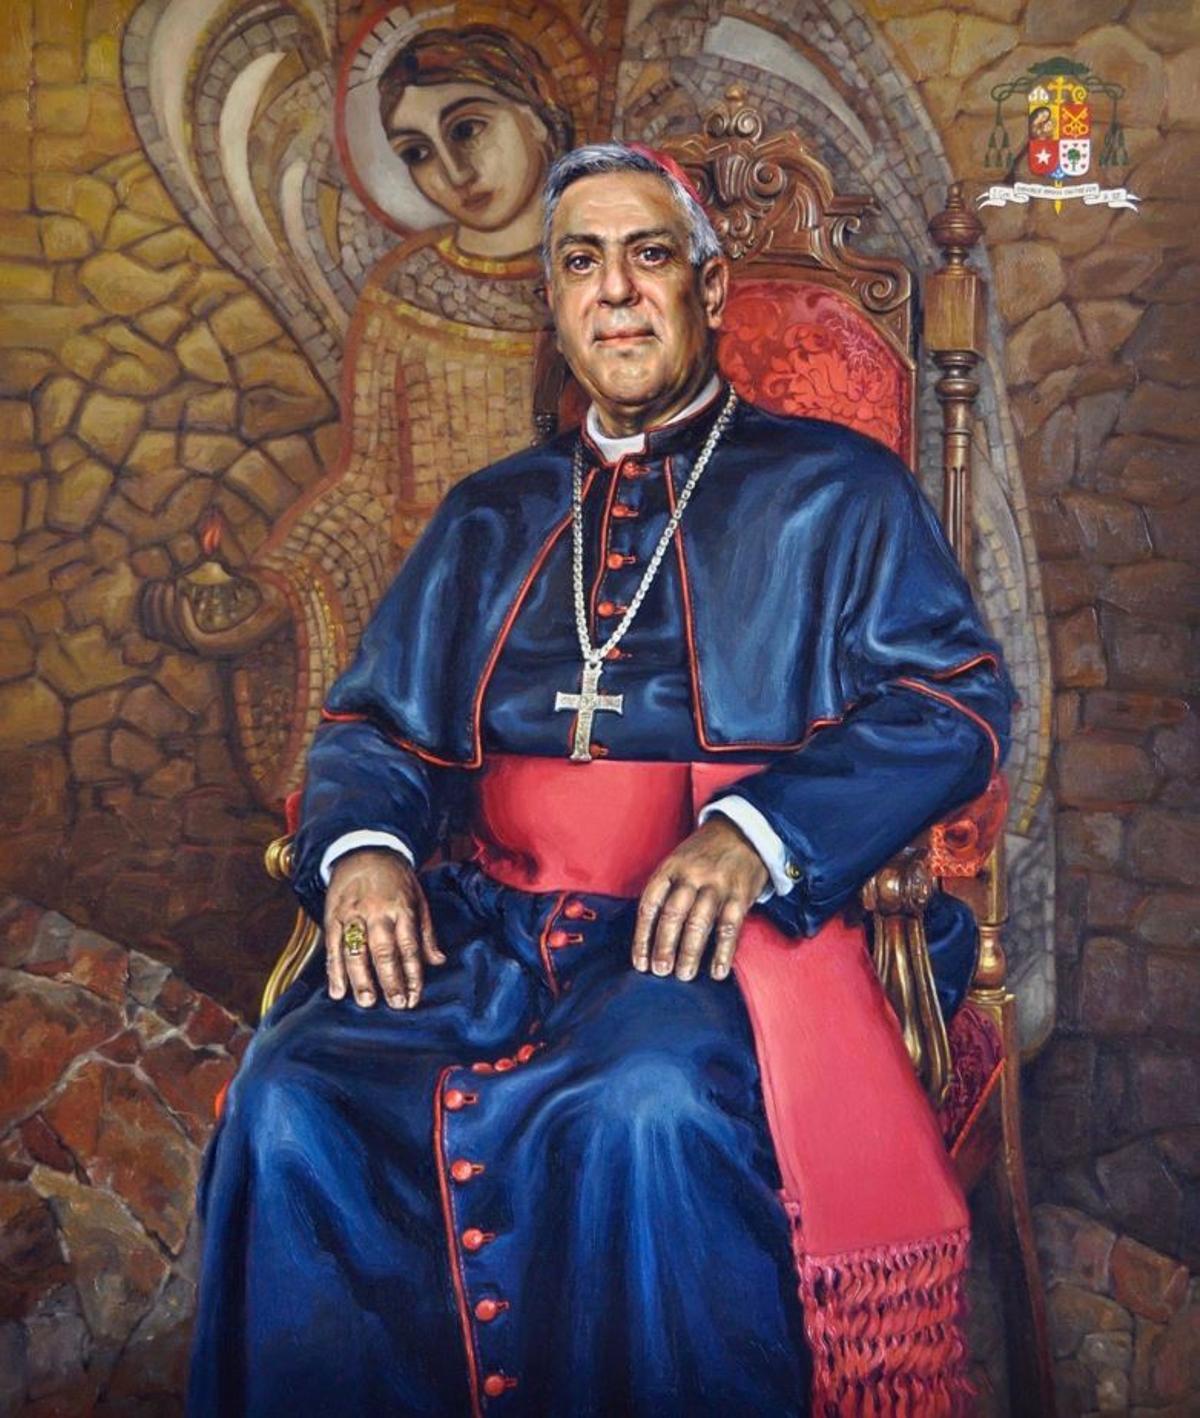 Bernardo Álvarez protagoniza el último retrato, como actual obispo de la Diócesis de Tenerife.